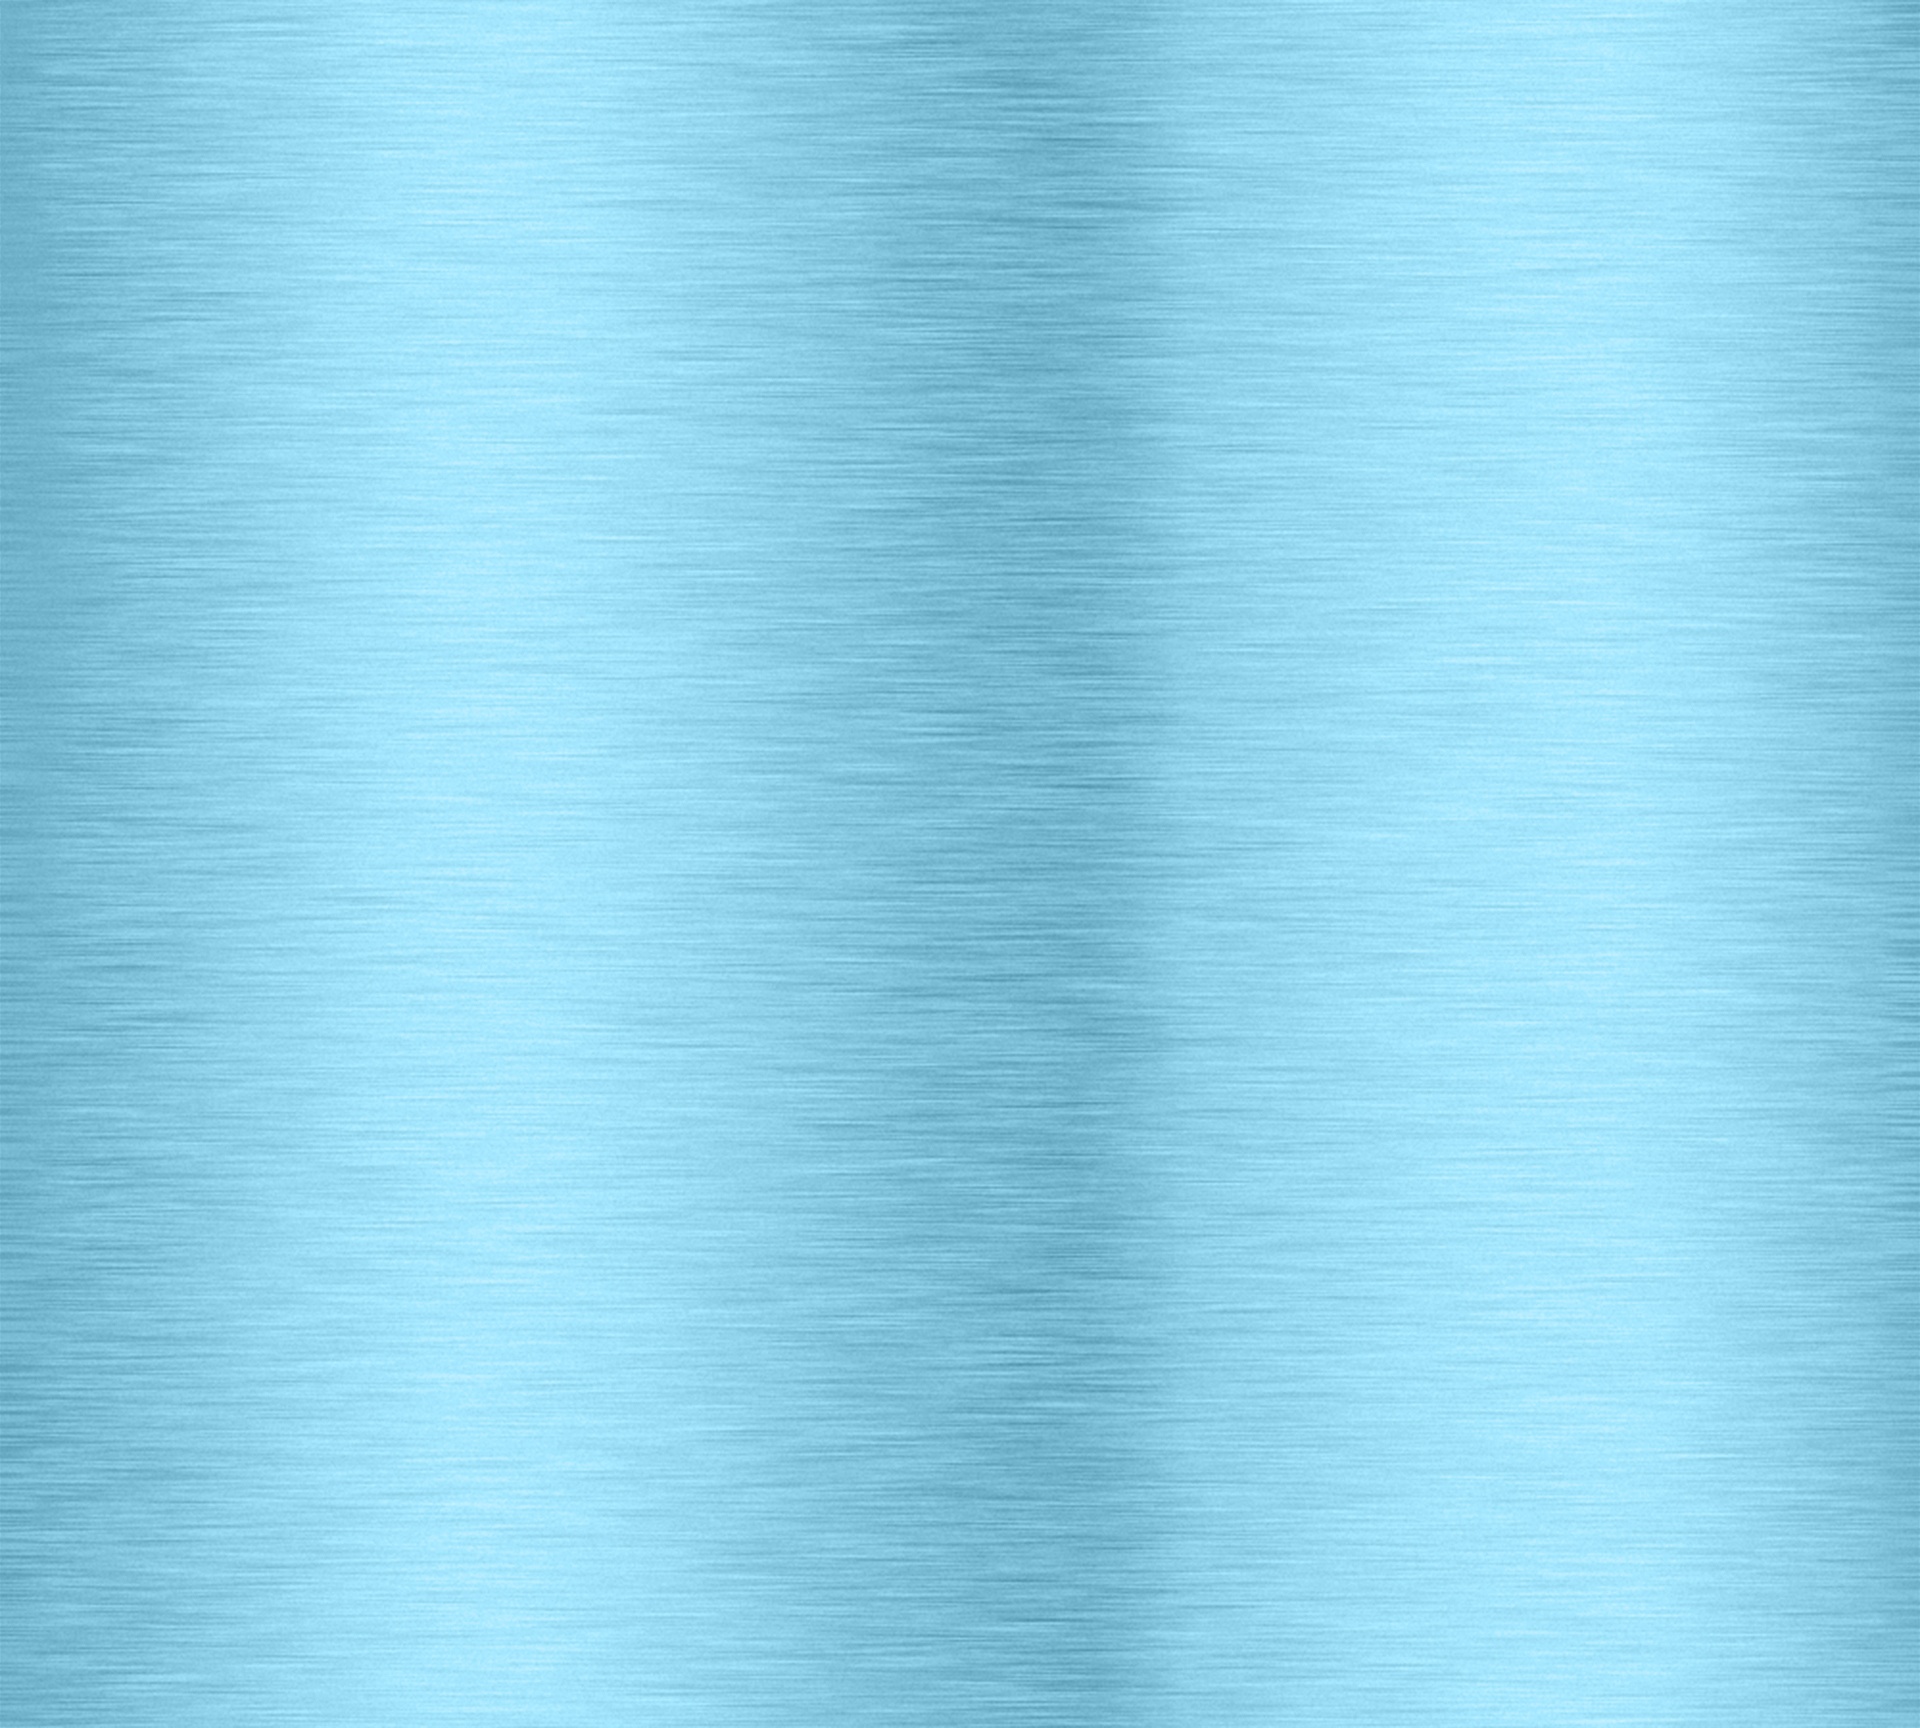 Metallic Blue Background